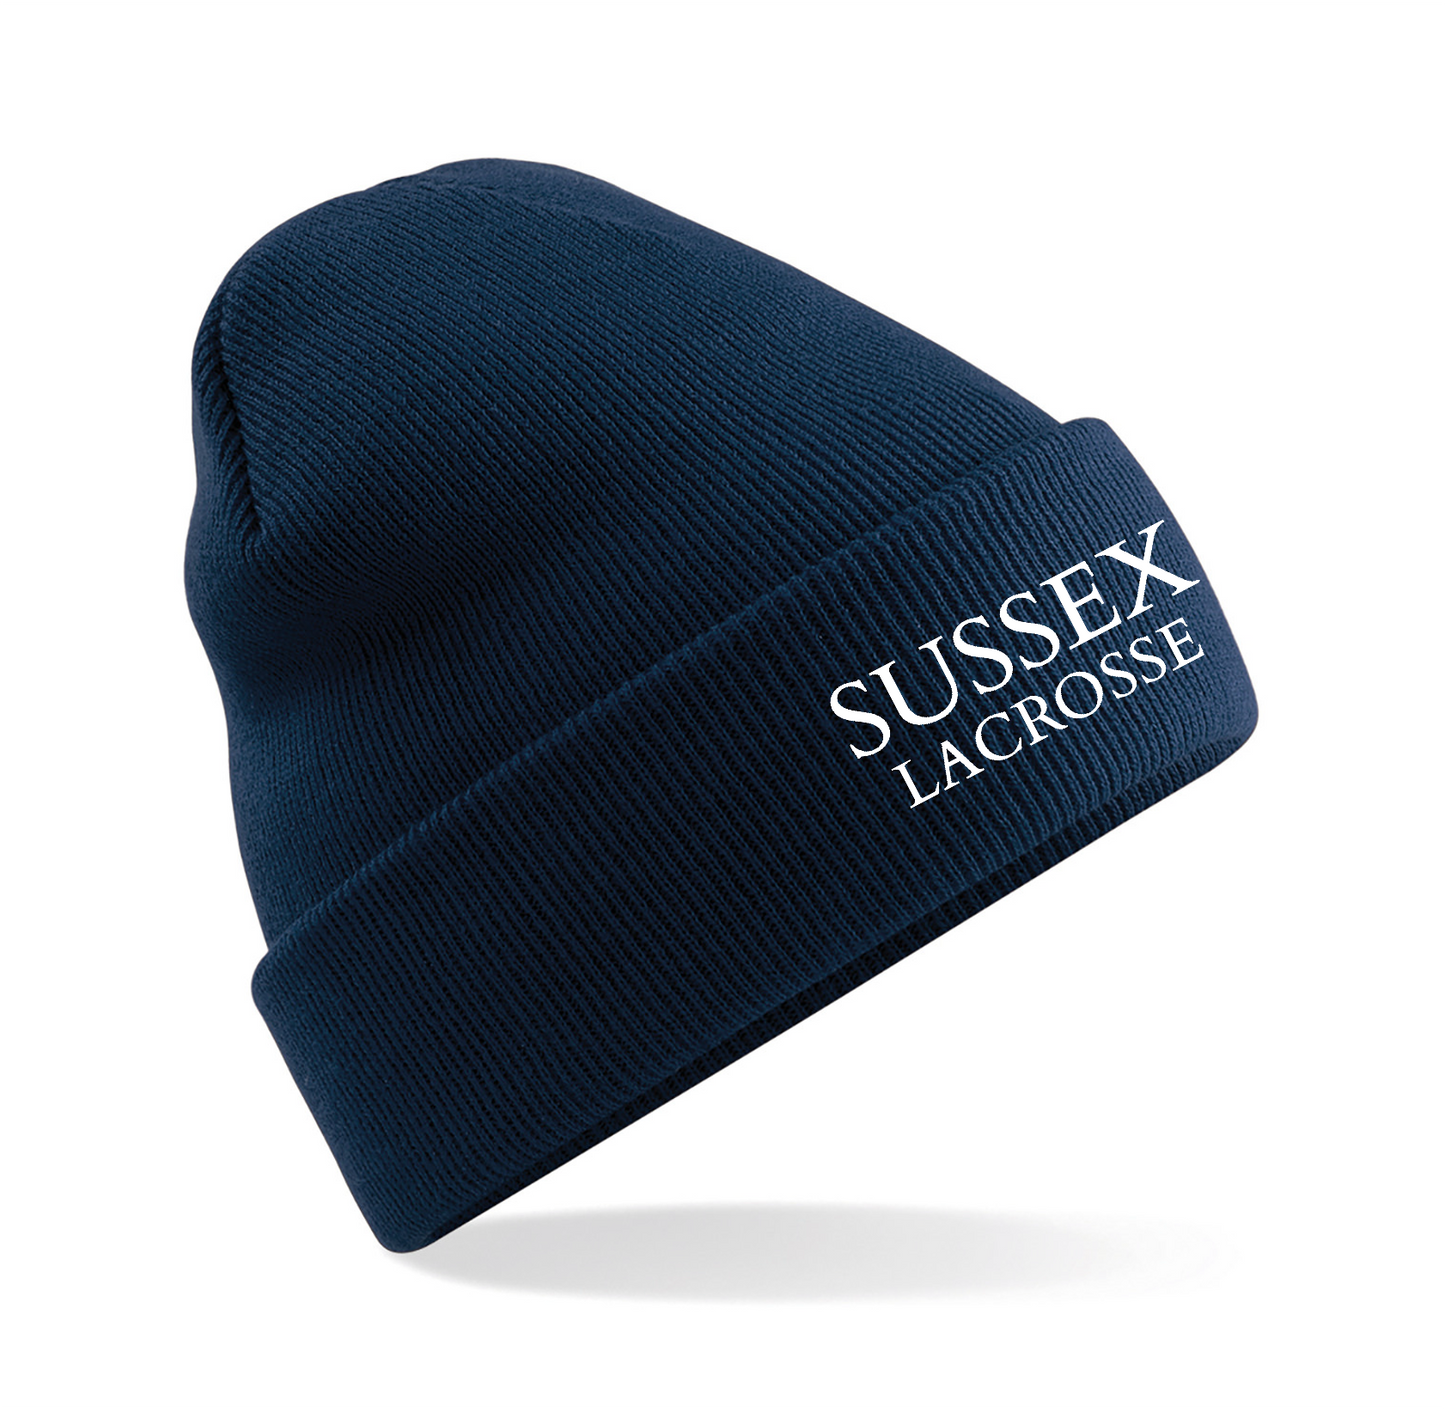 Uni of Sussex Lacrosse Beanie Hat